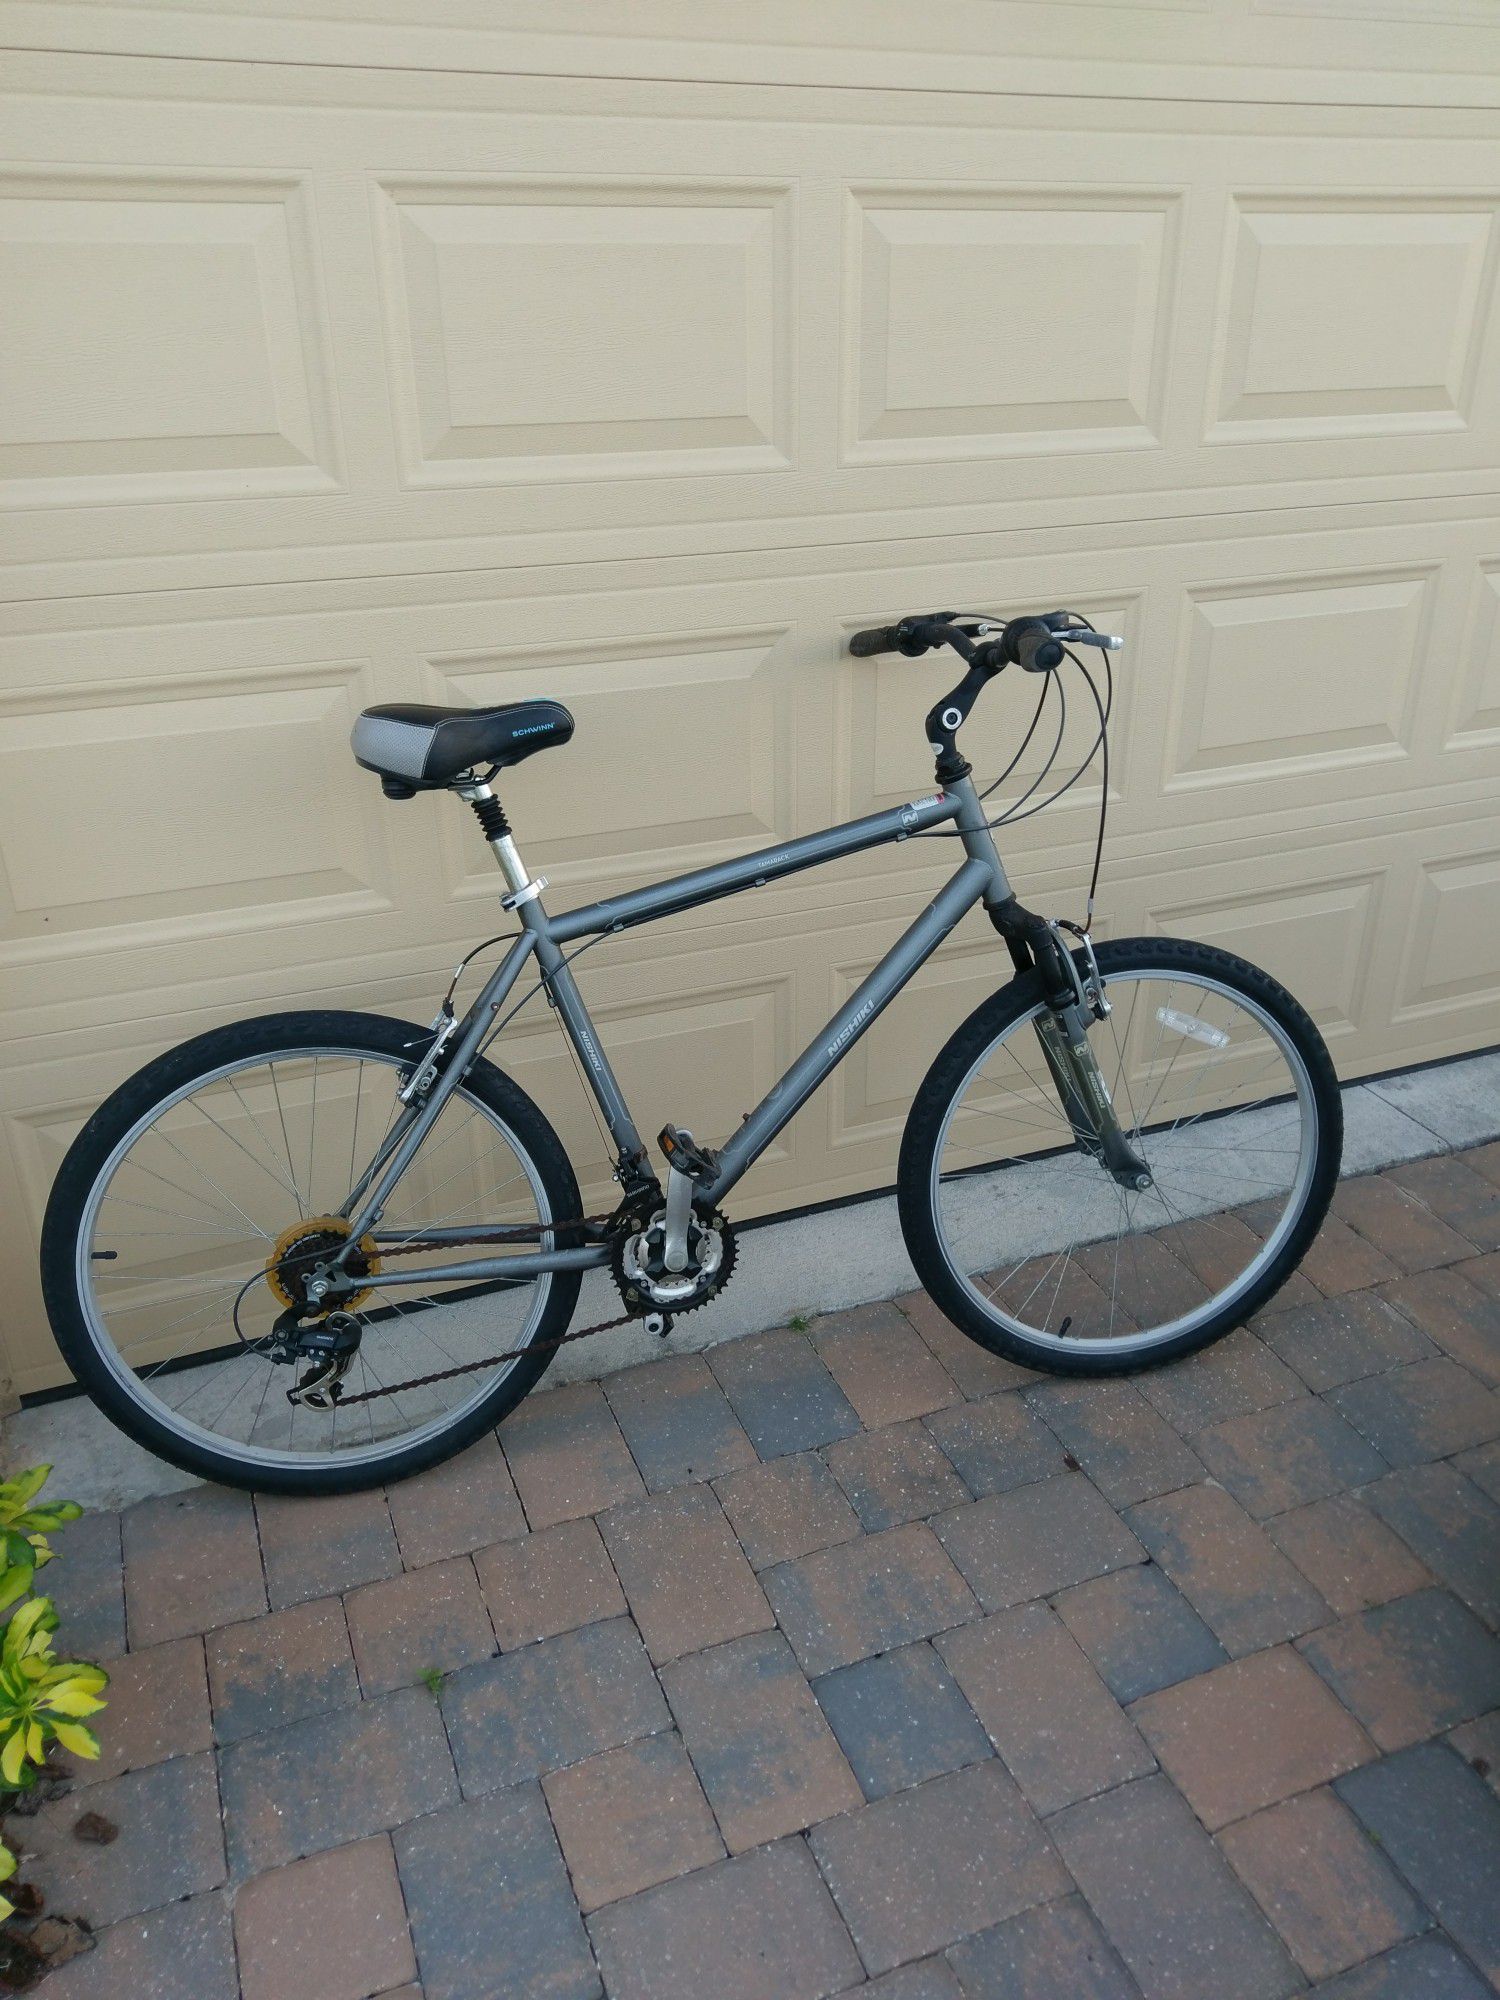 Nishiki Tamarack Men's Comfort Bike gray large frame size for errands and casual biking